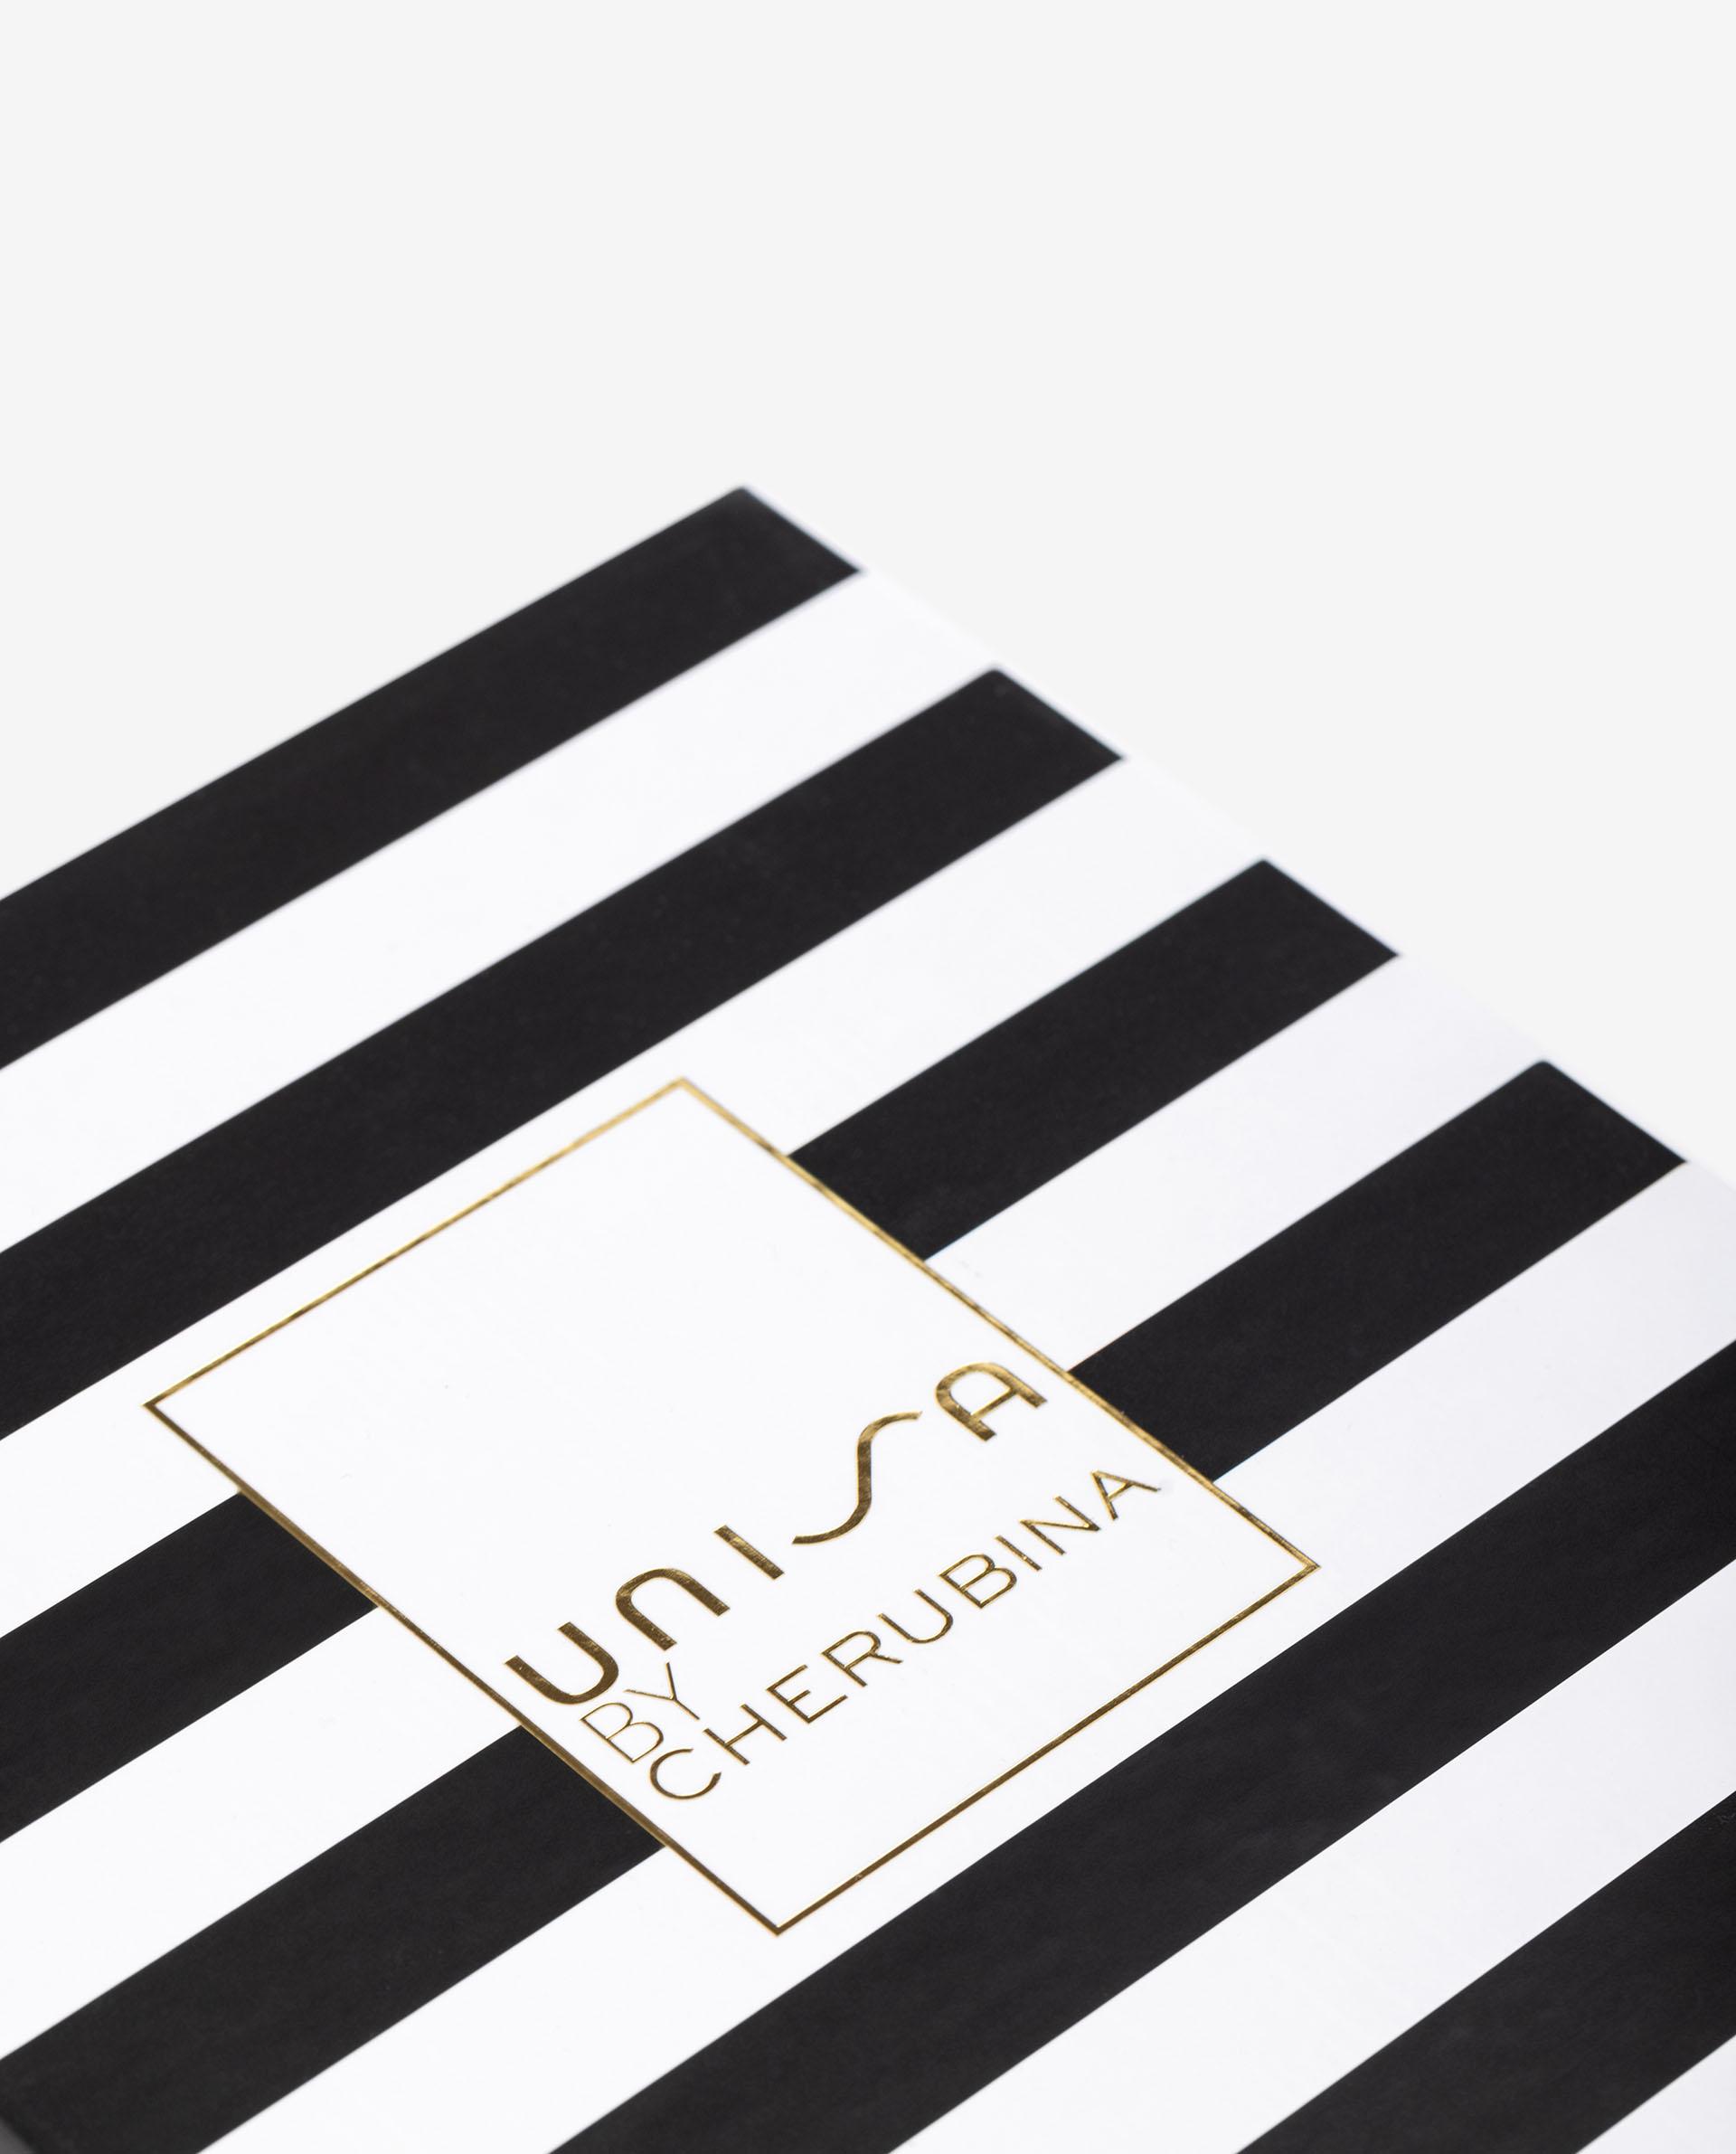 Unisa Unisa by Cherubina | Hohe Schuhe und Partyschuhe SELIM_KS_MER black/gold